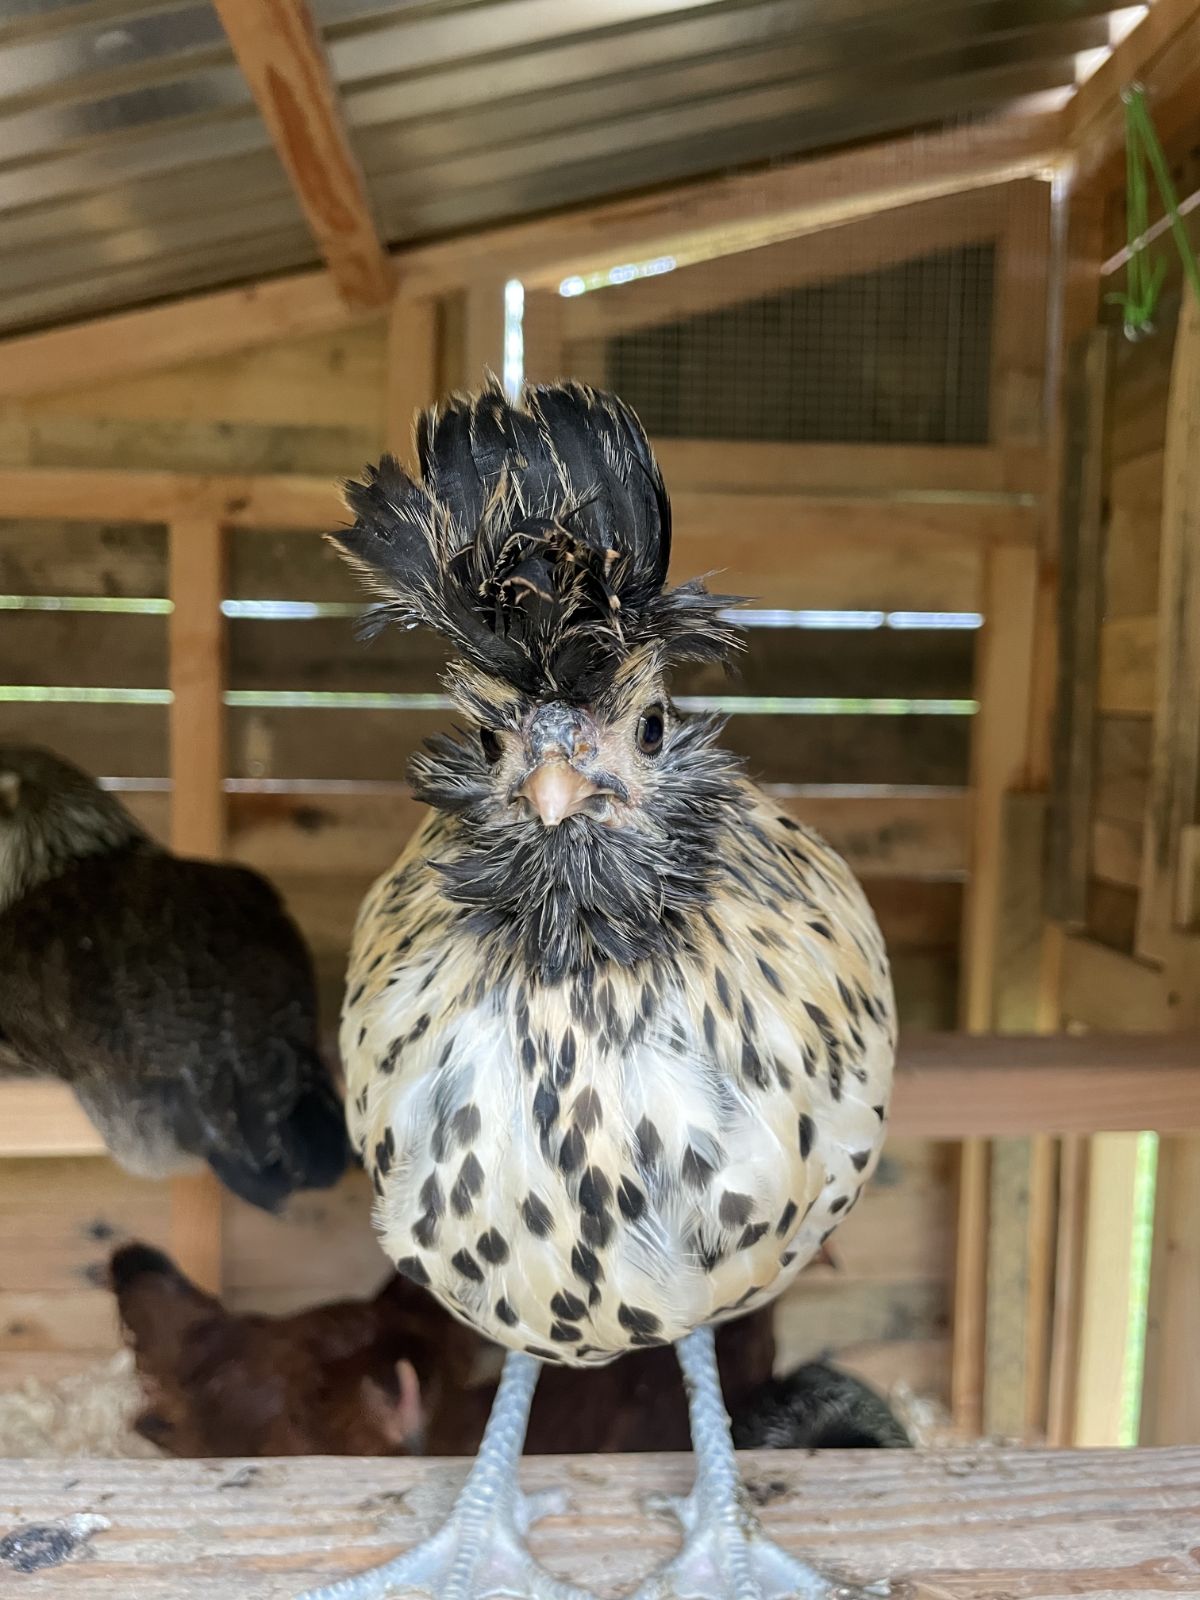 An adorable curious Brabanter chicken in a chicken coop.